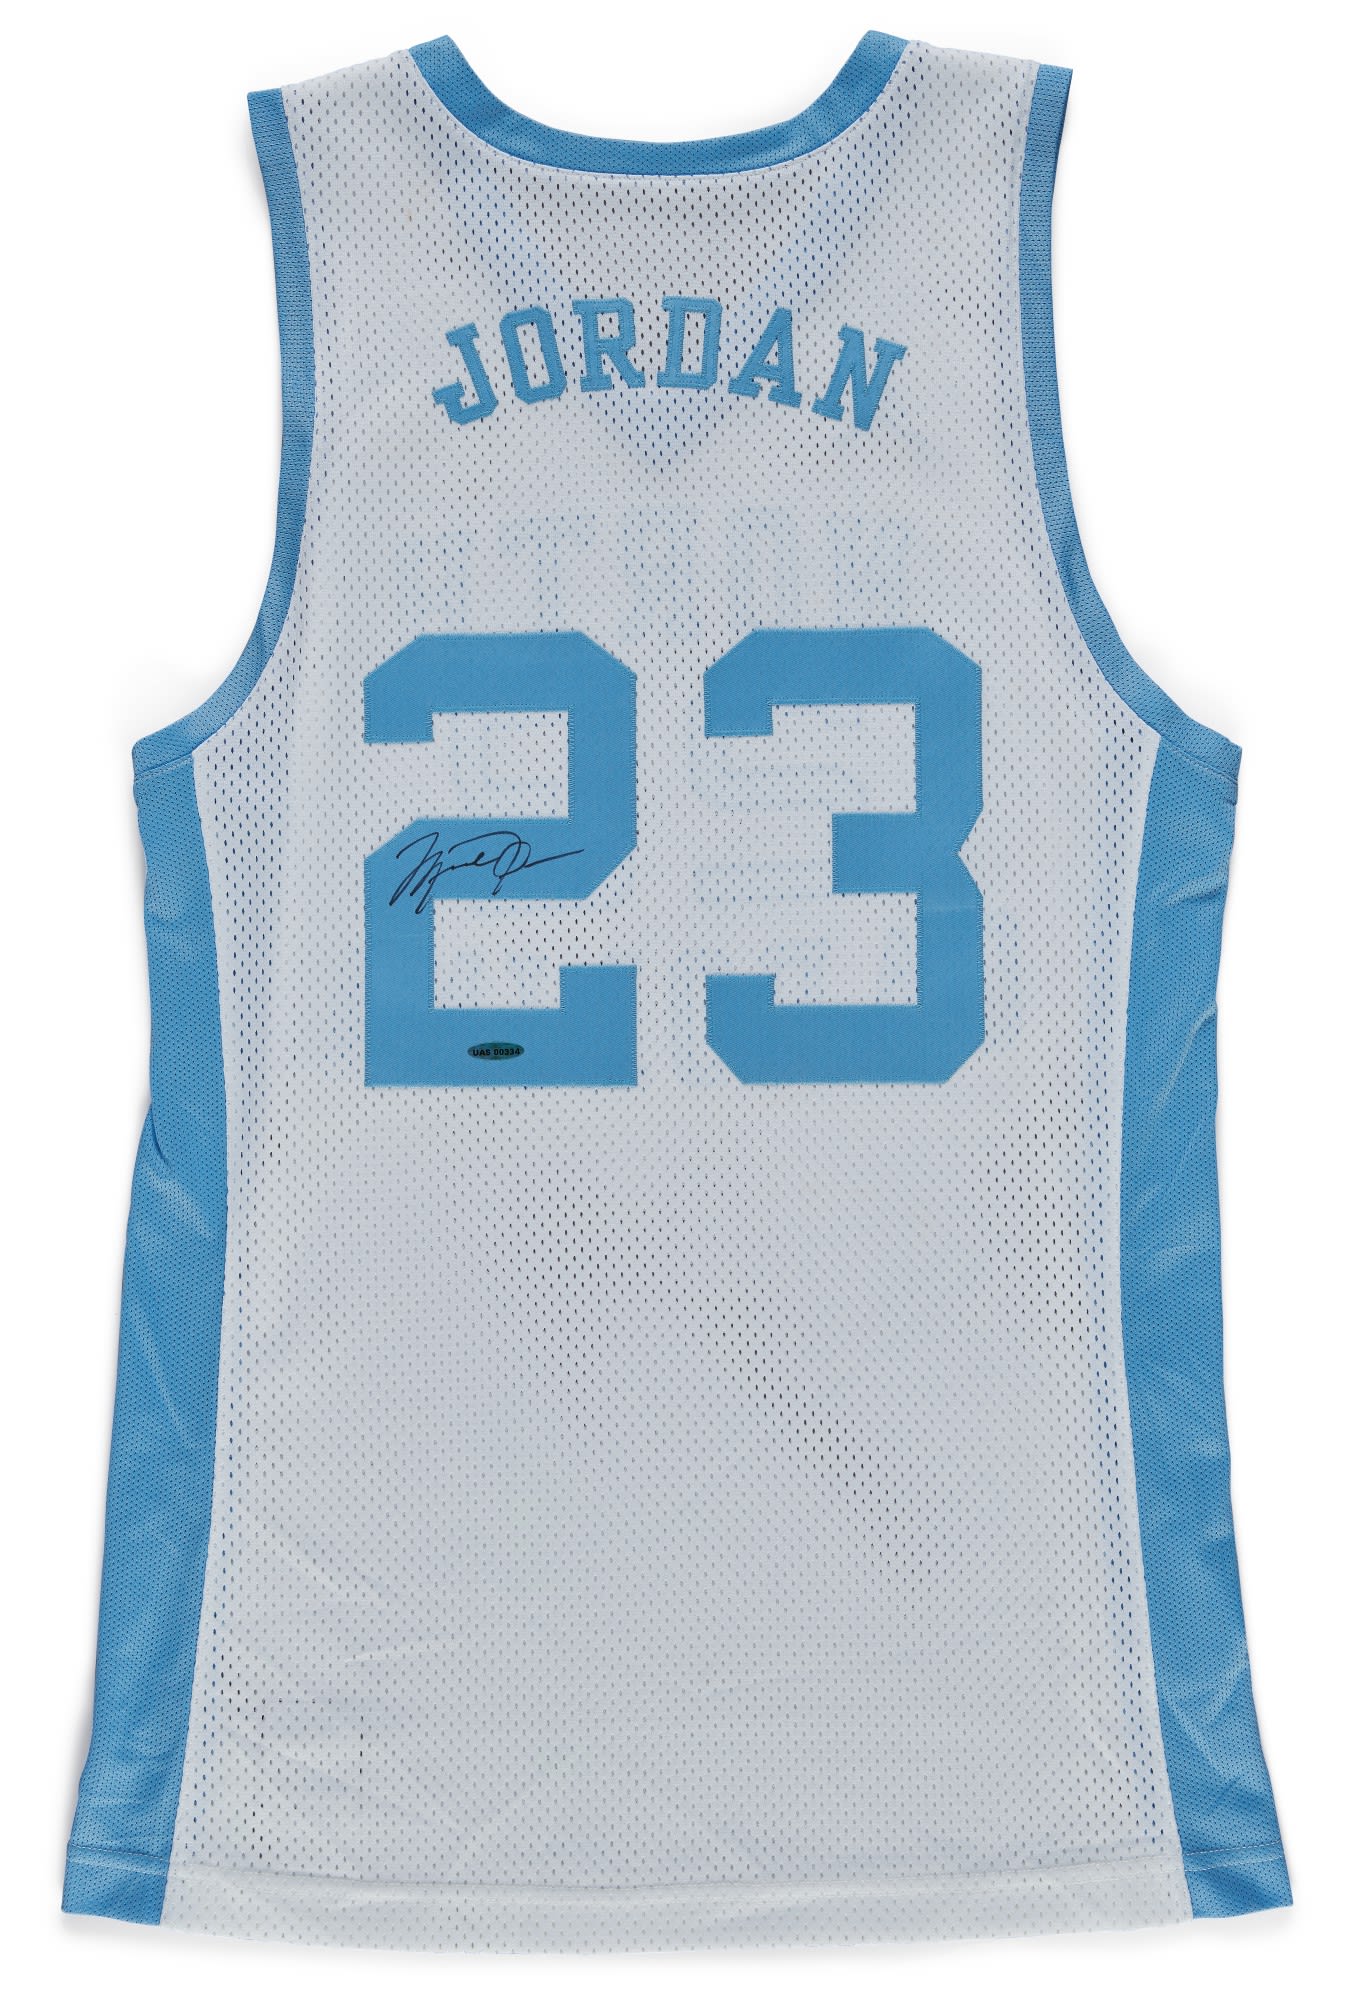 Jordan Brand x Converse &#x27;UNC&#x27; Jersey 2012 Sotheby&#x27;s Auction